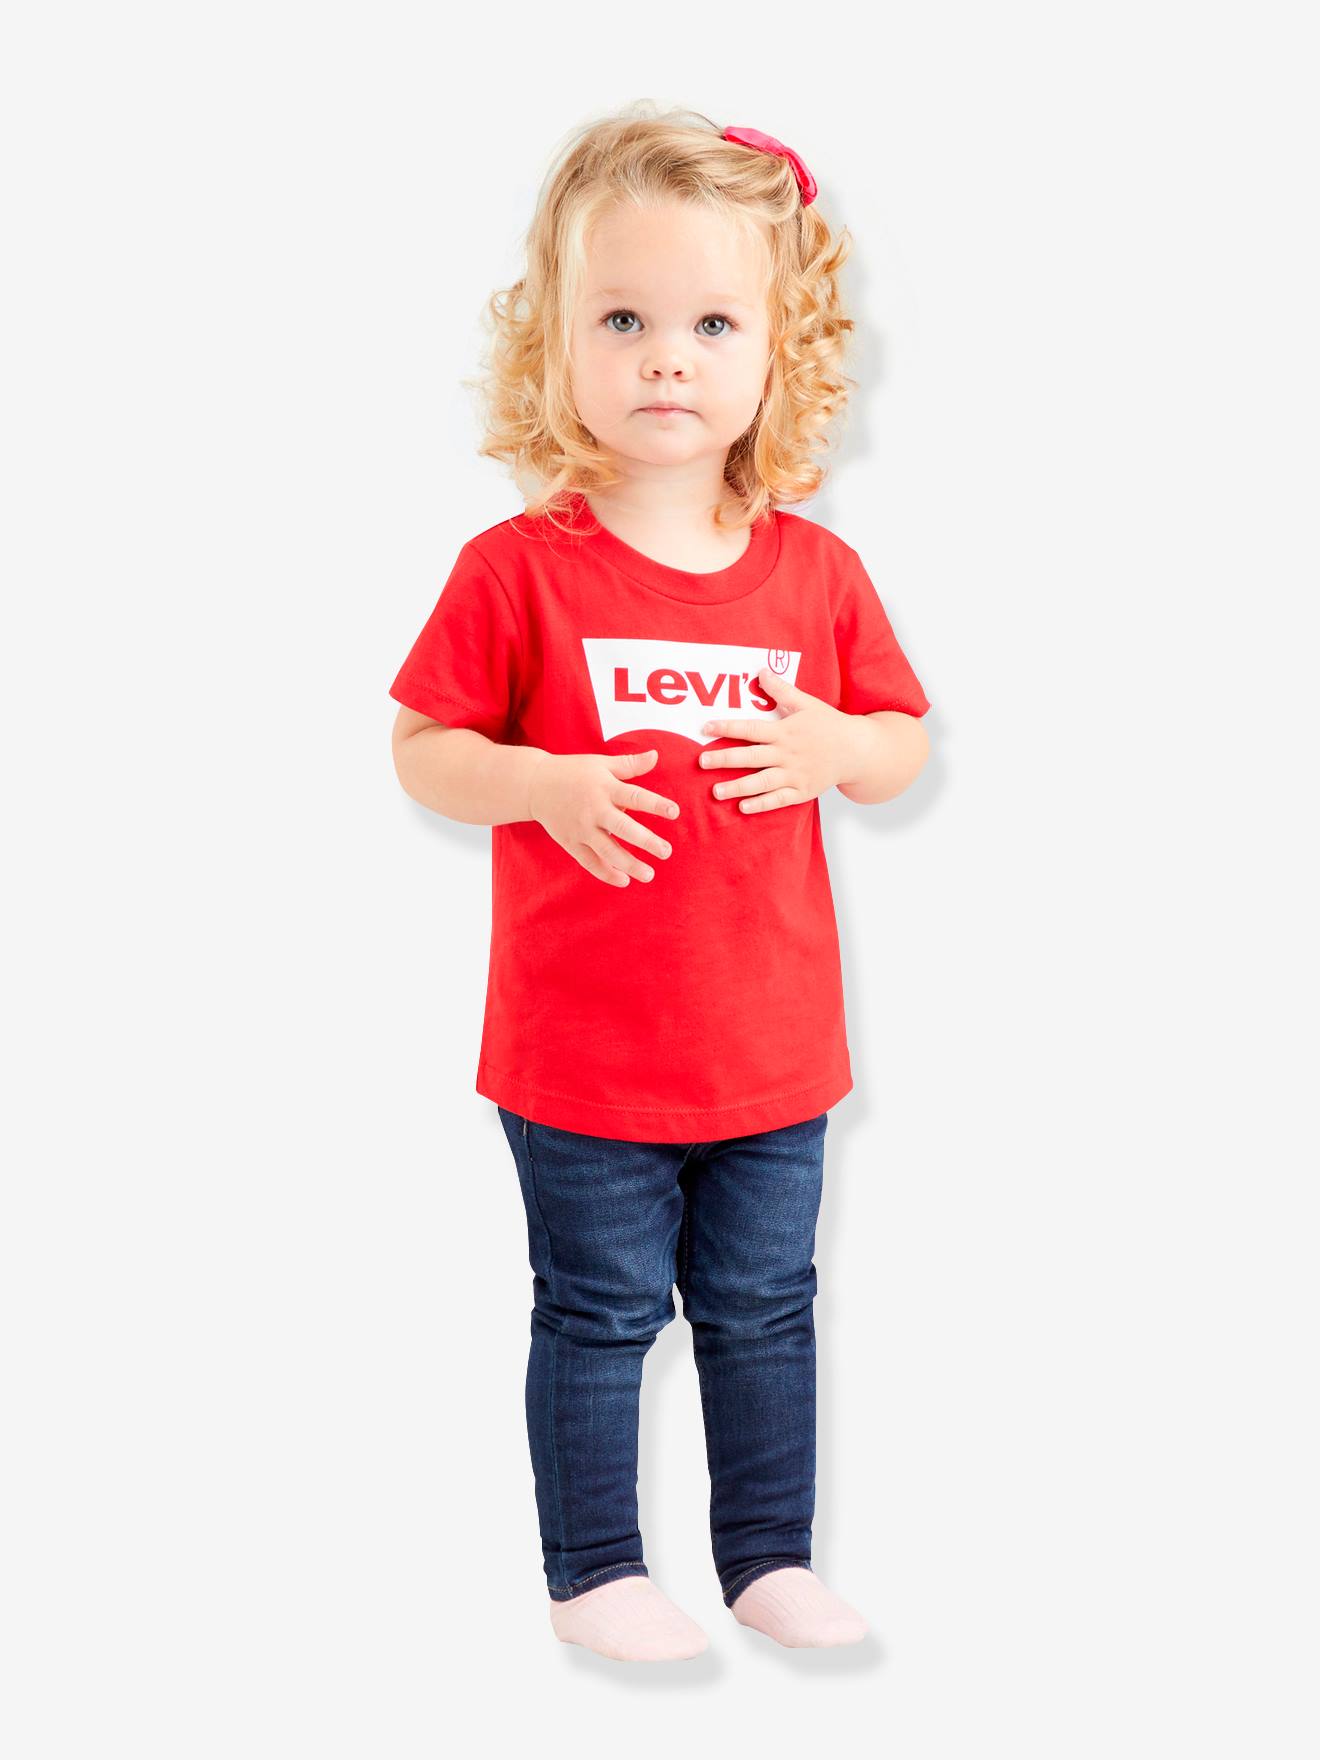 Camiseta Levi's, bebé azul marino Levi's